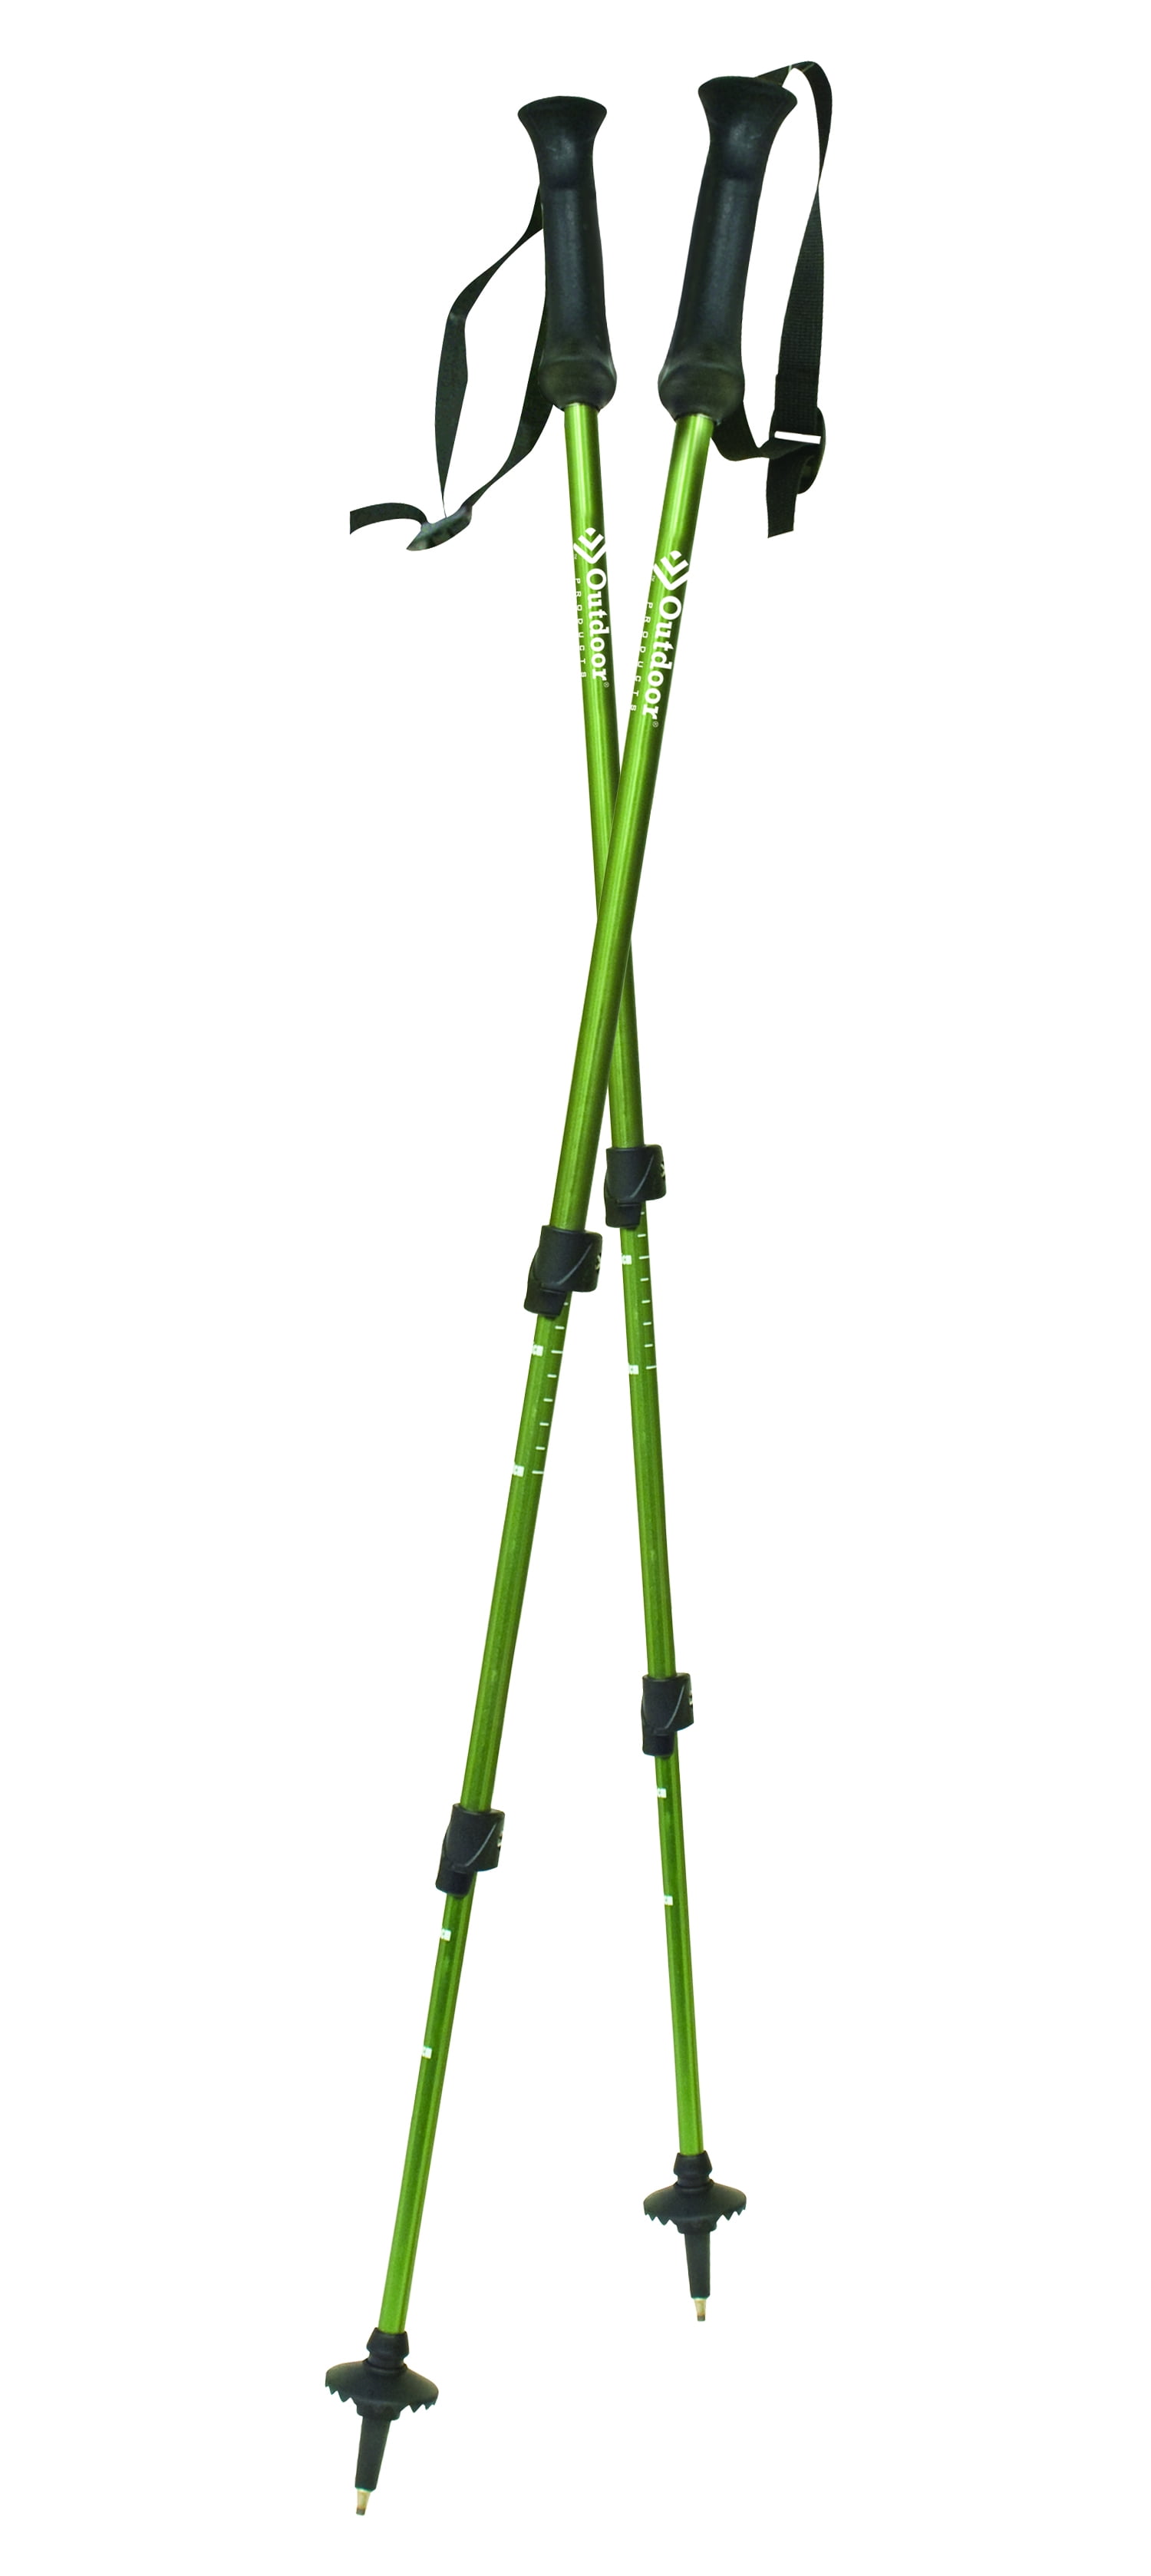 Outdoor Products Apex Trekking / Walking / Hiking Pole Set Aluminum, Green